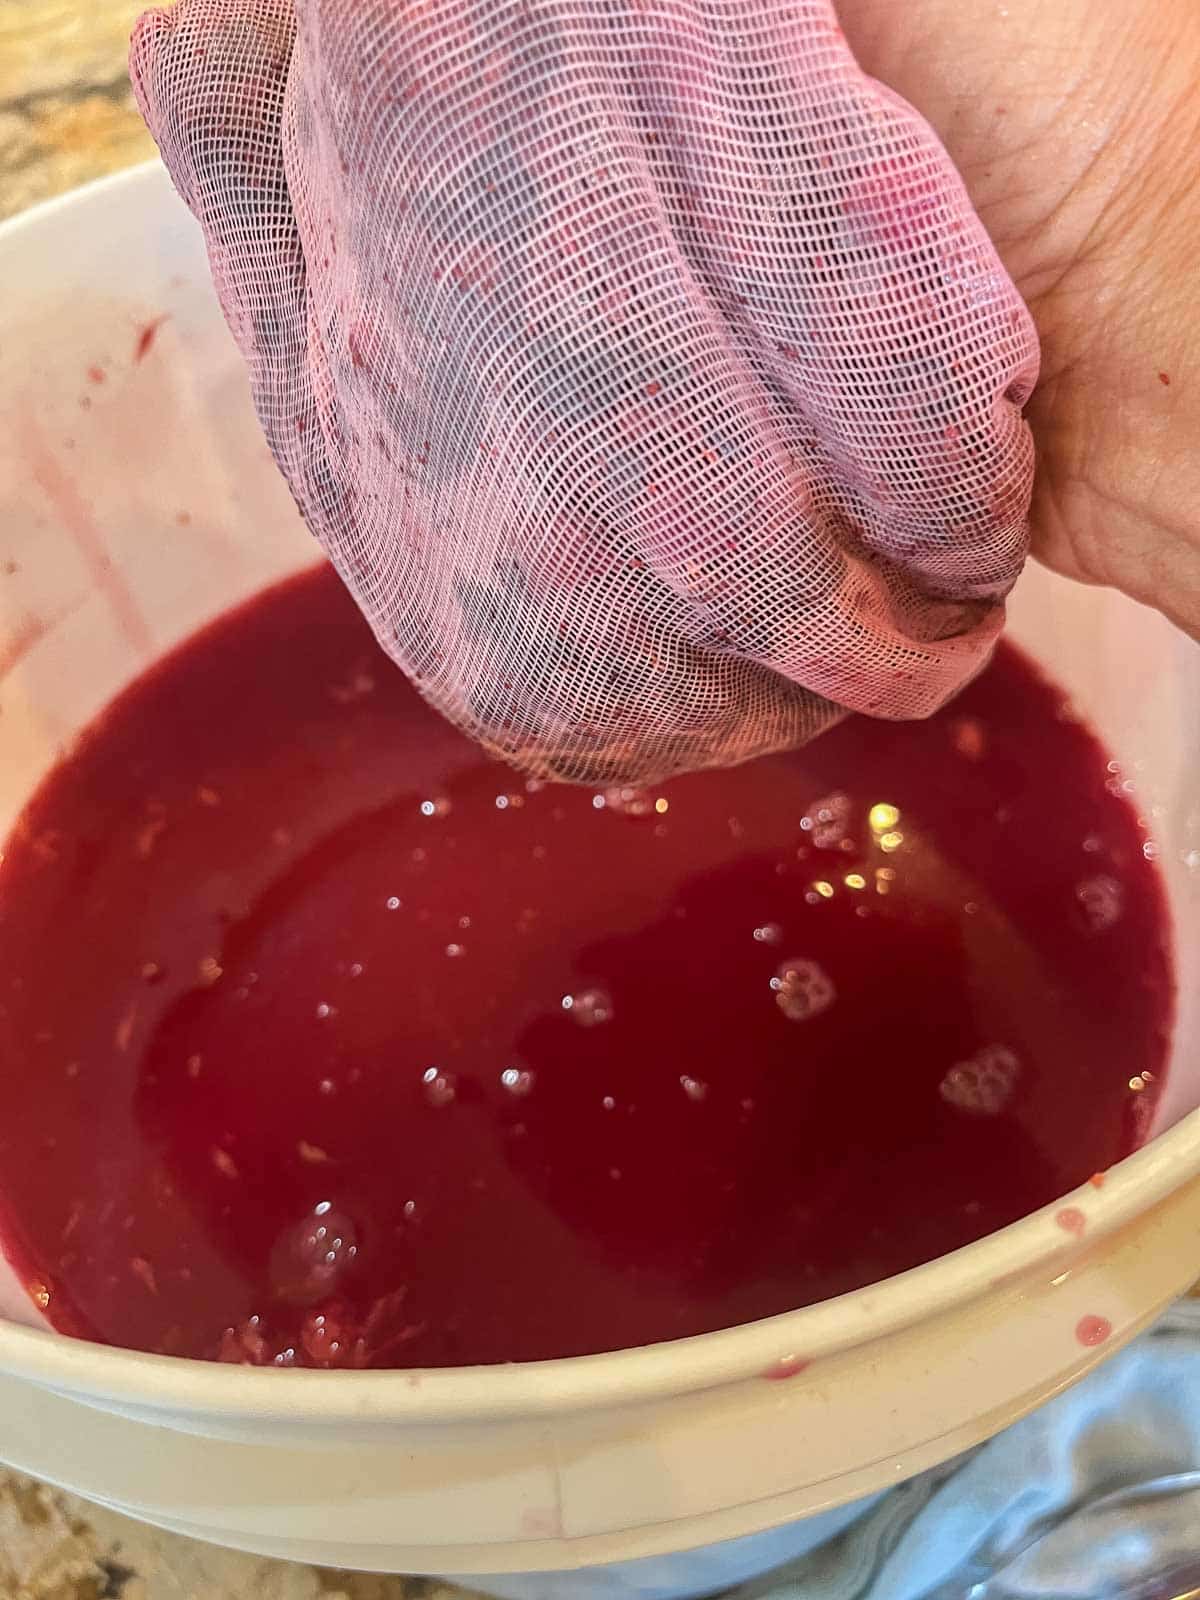 squeezing berries into fermentor bucket